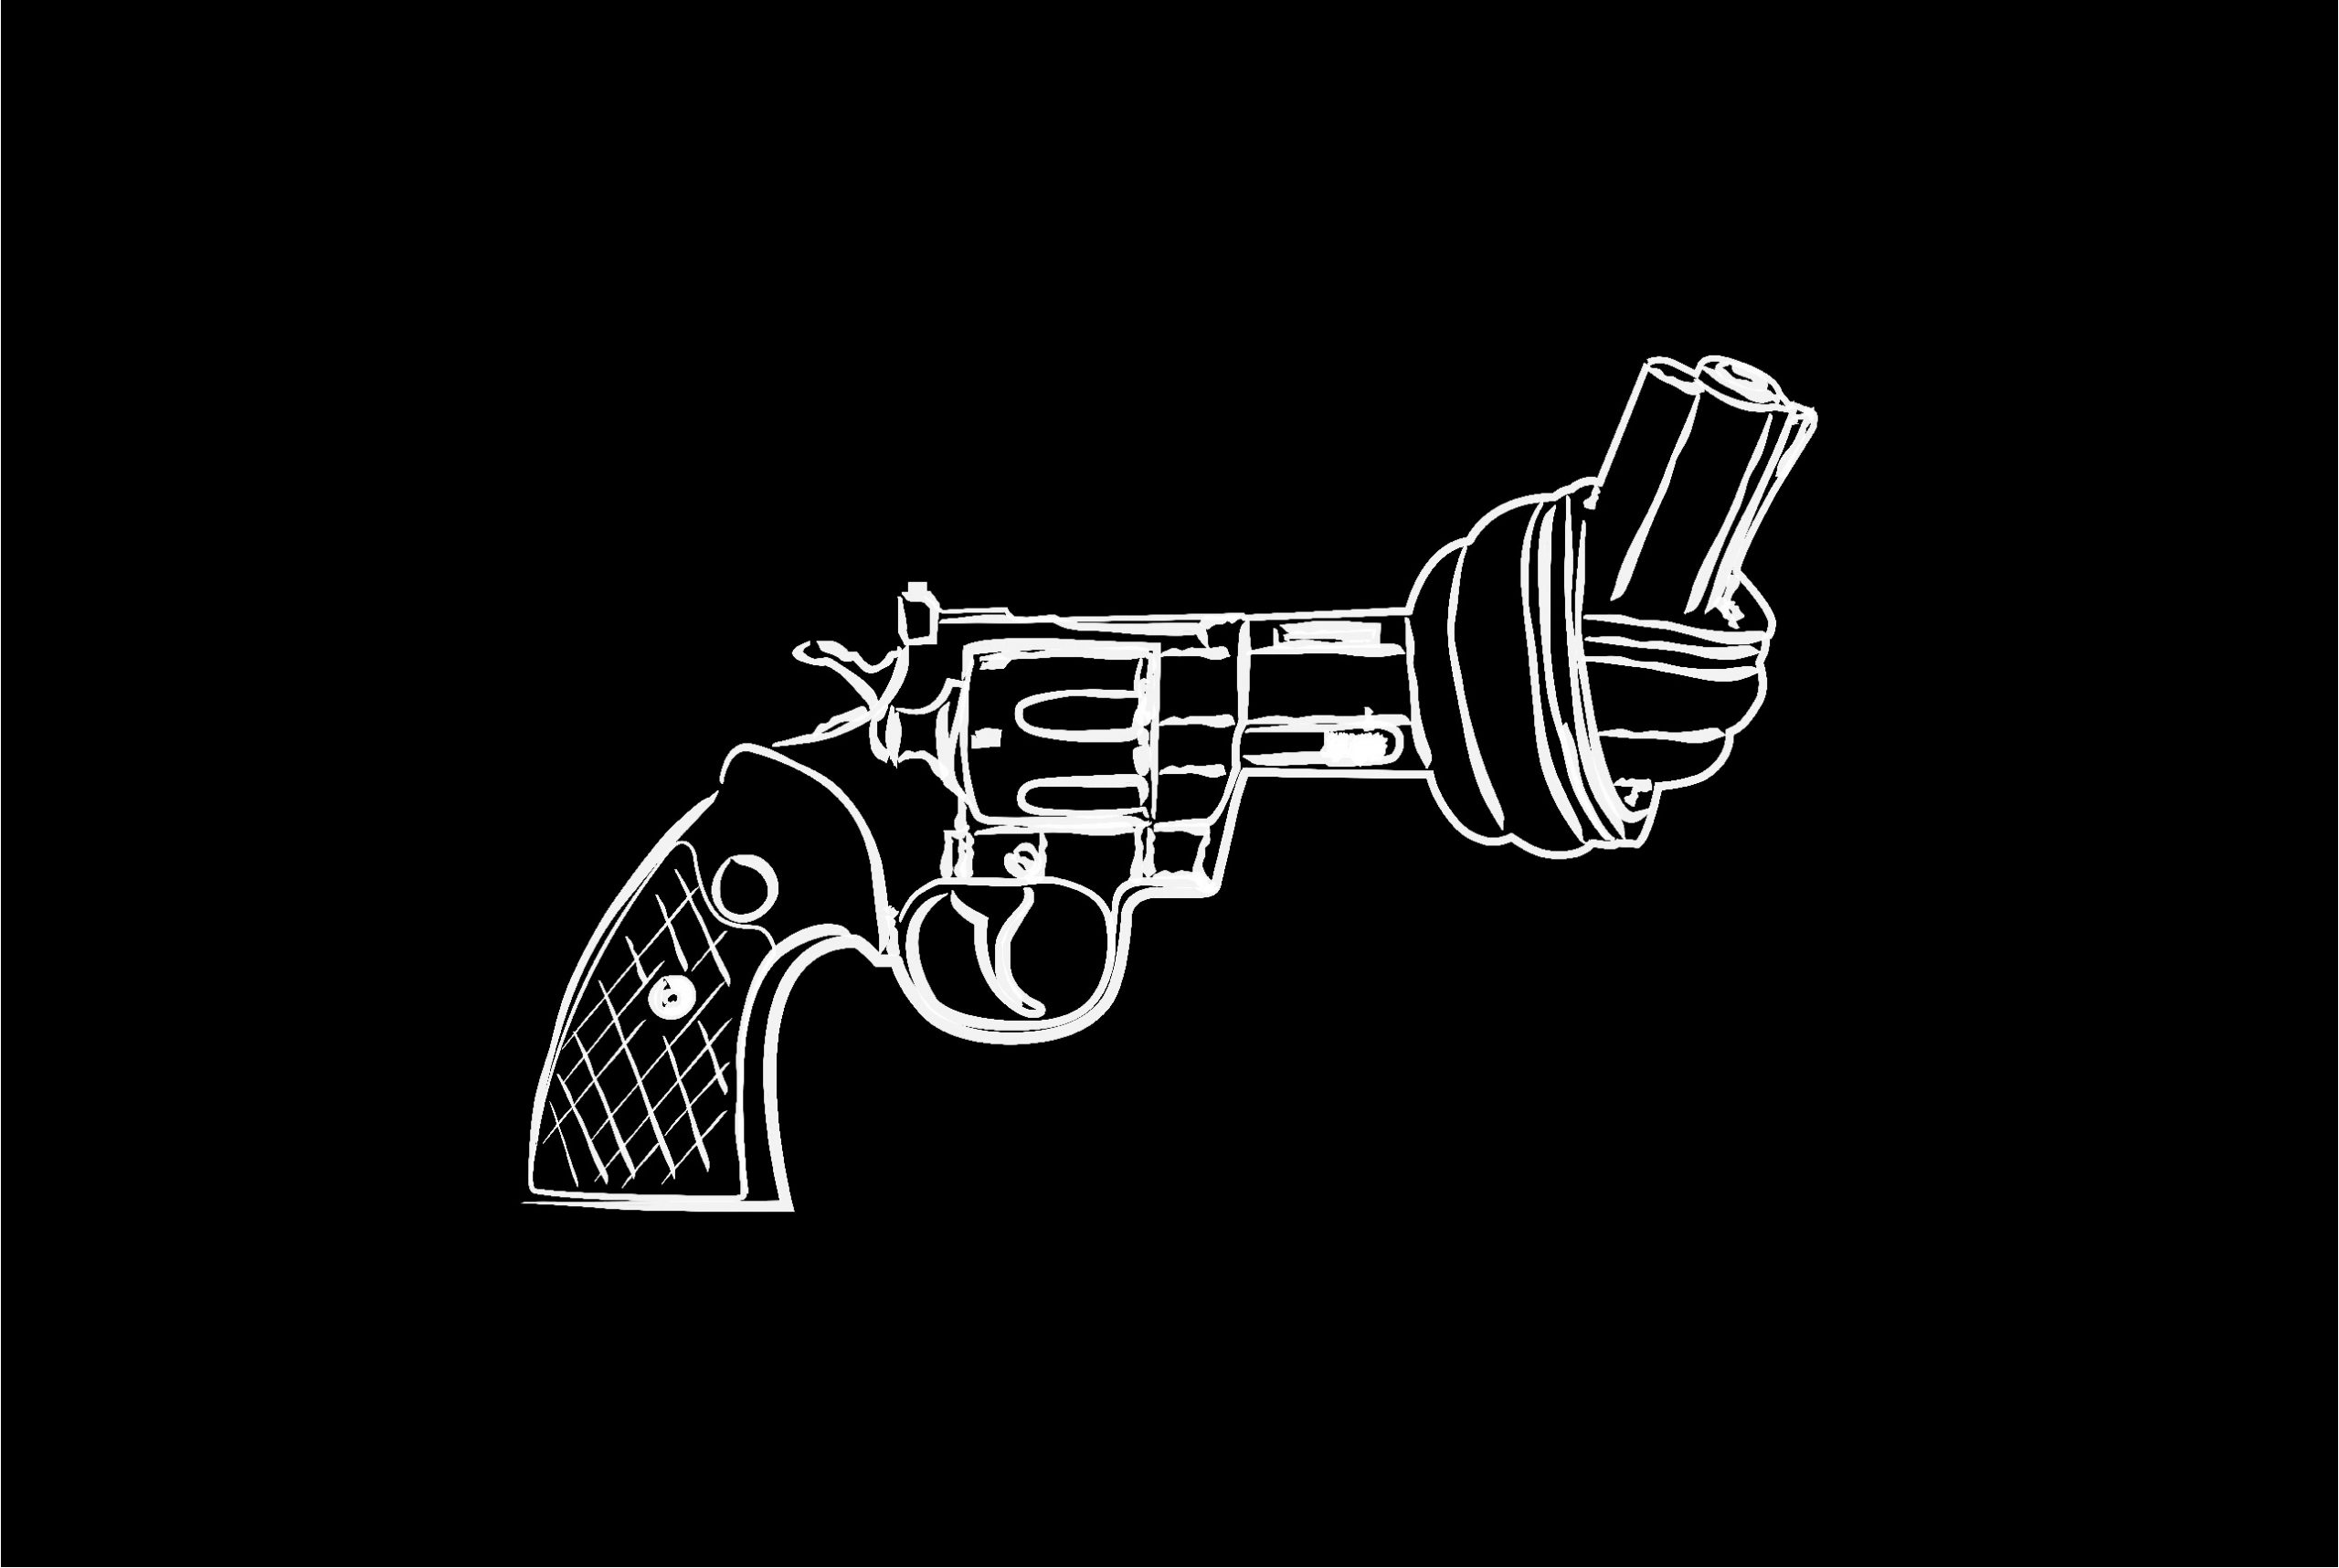 Non violence gun line art on black background poster - Artdesign